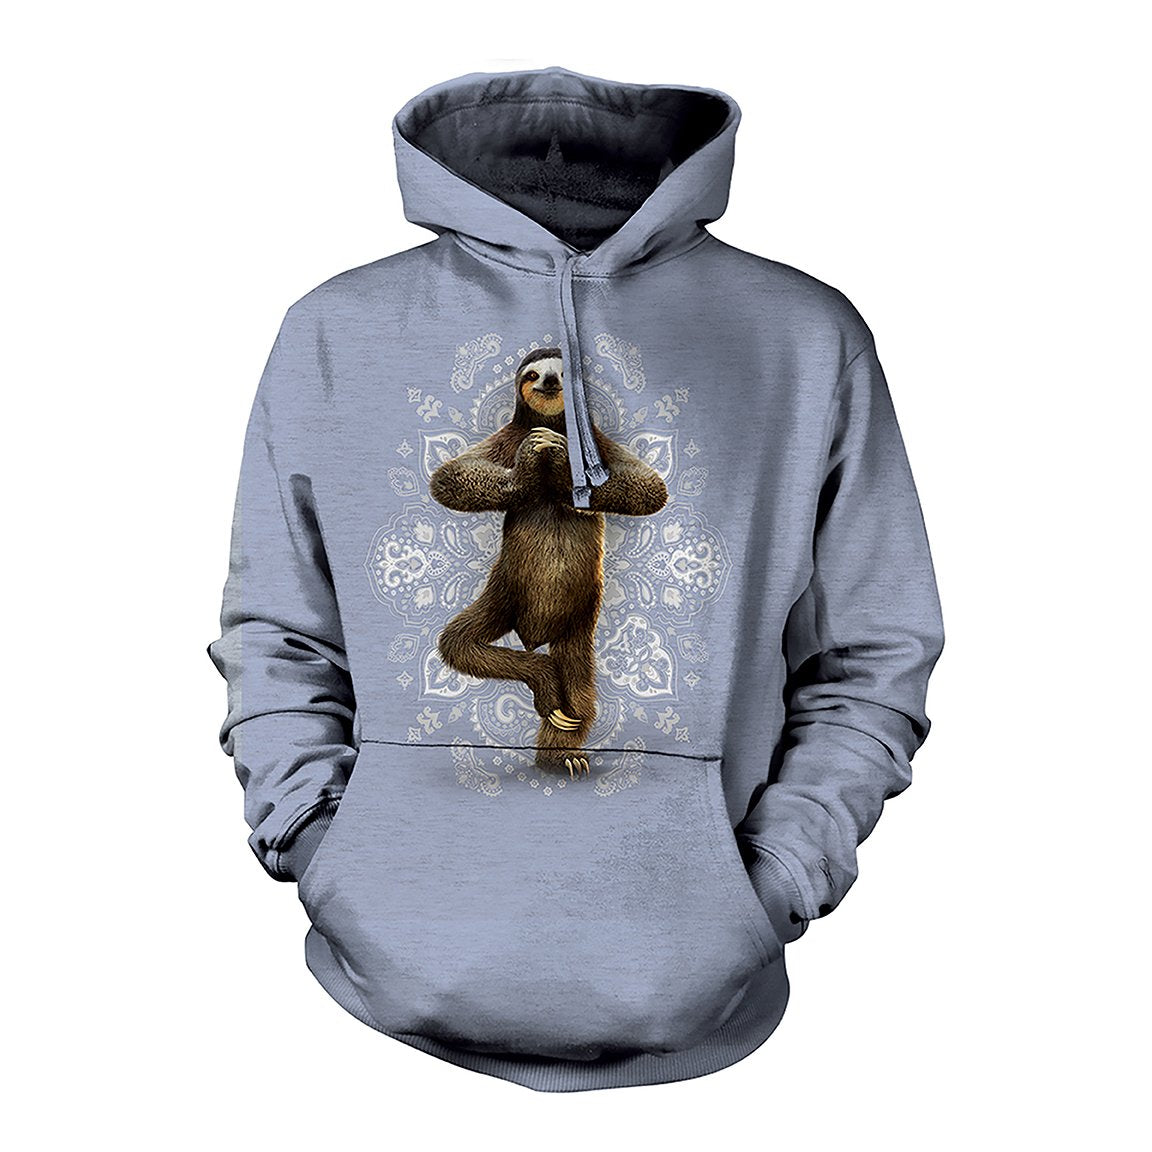 Namaste Sloth - Adult Unisex Hoodie Sweatshirt